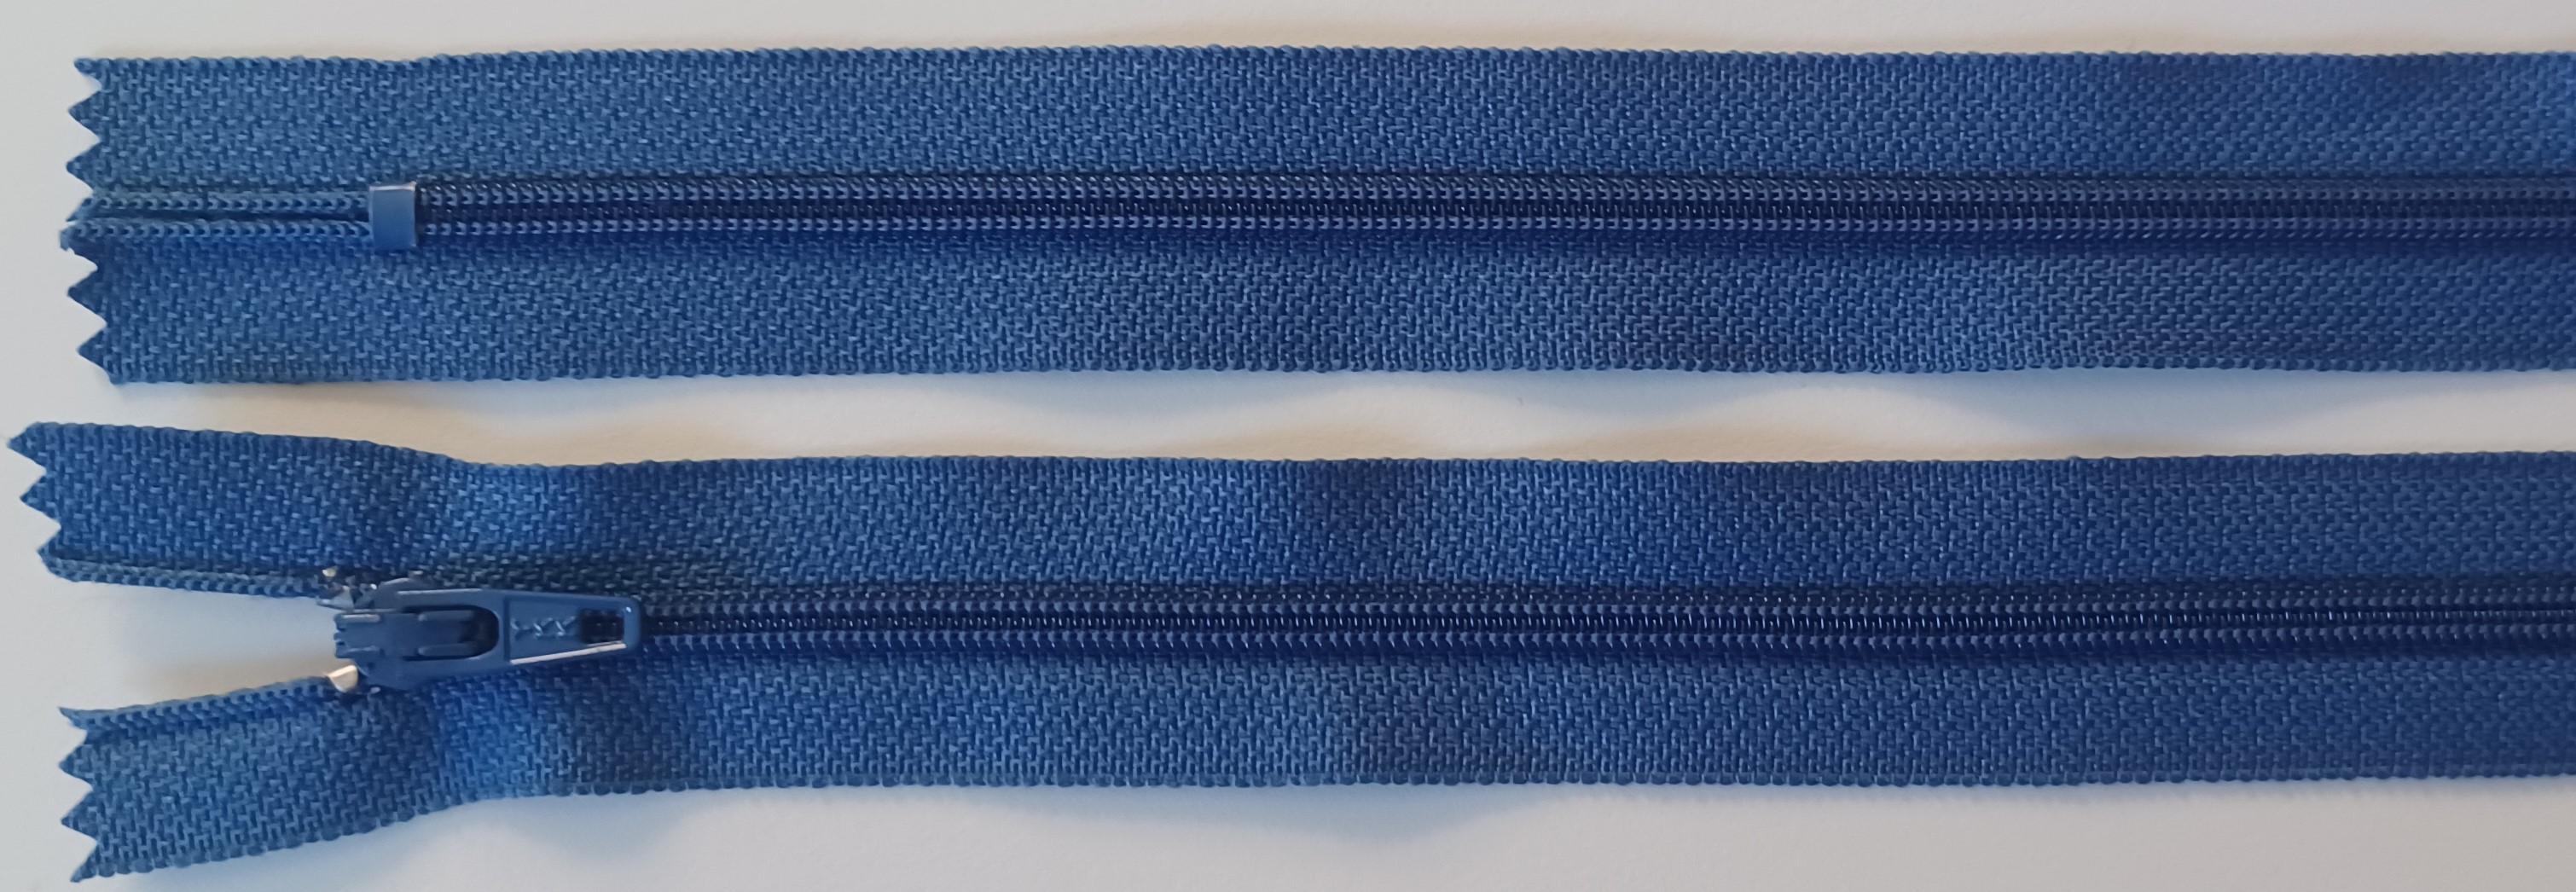 YKK 7" Cadet Nylon Coil Zipper